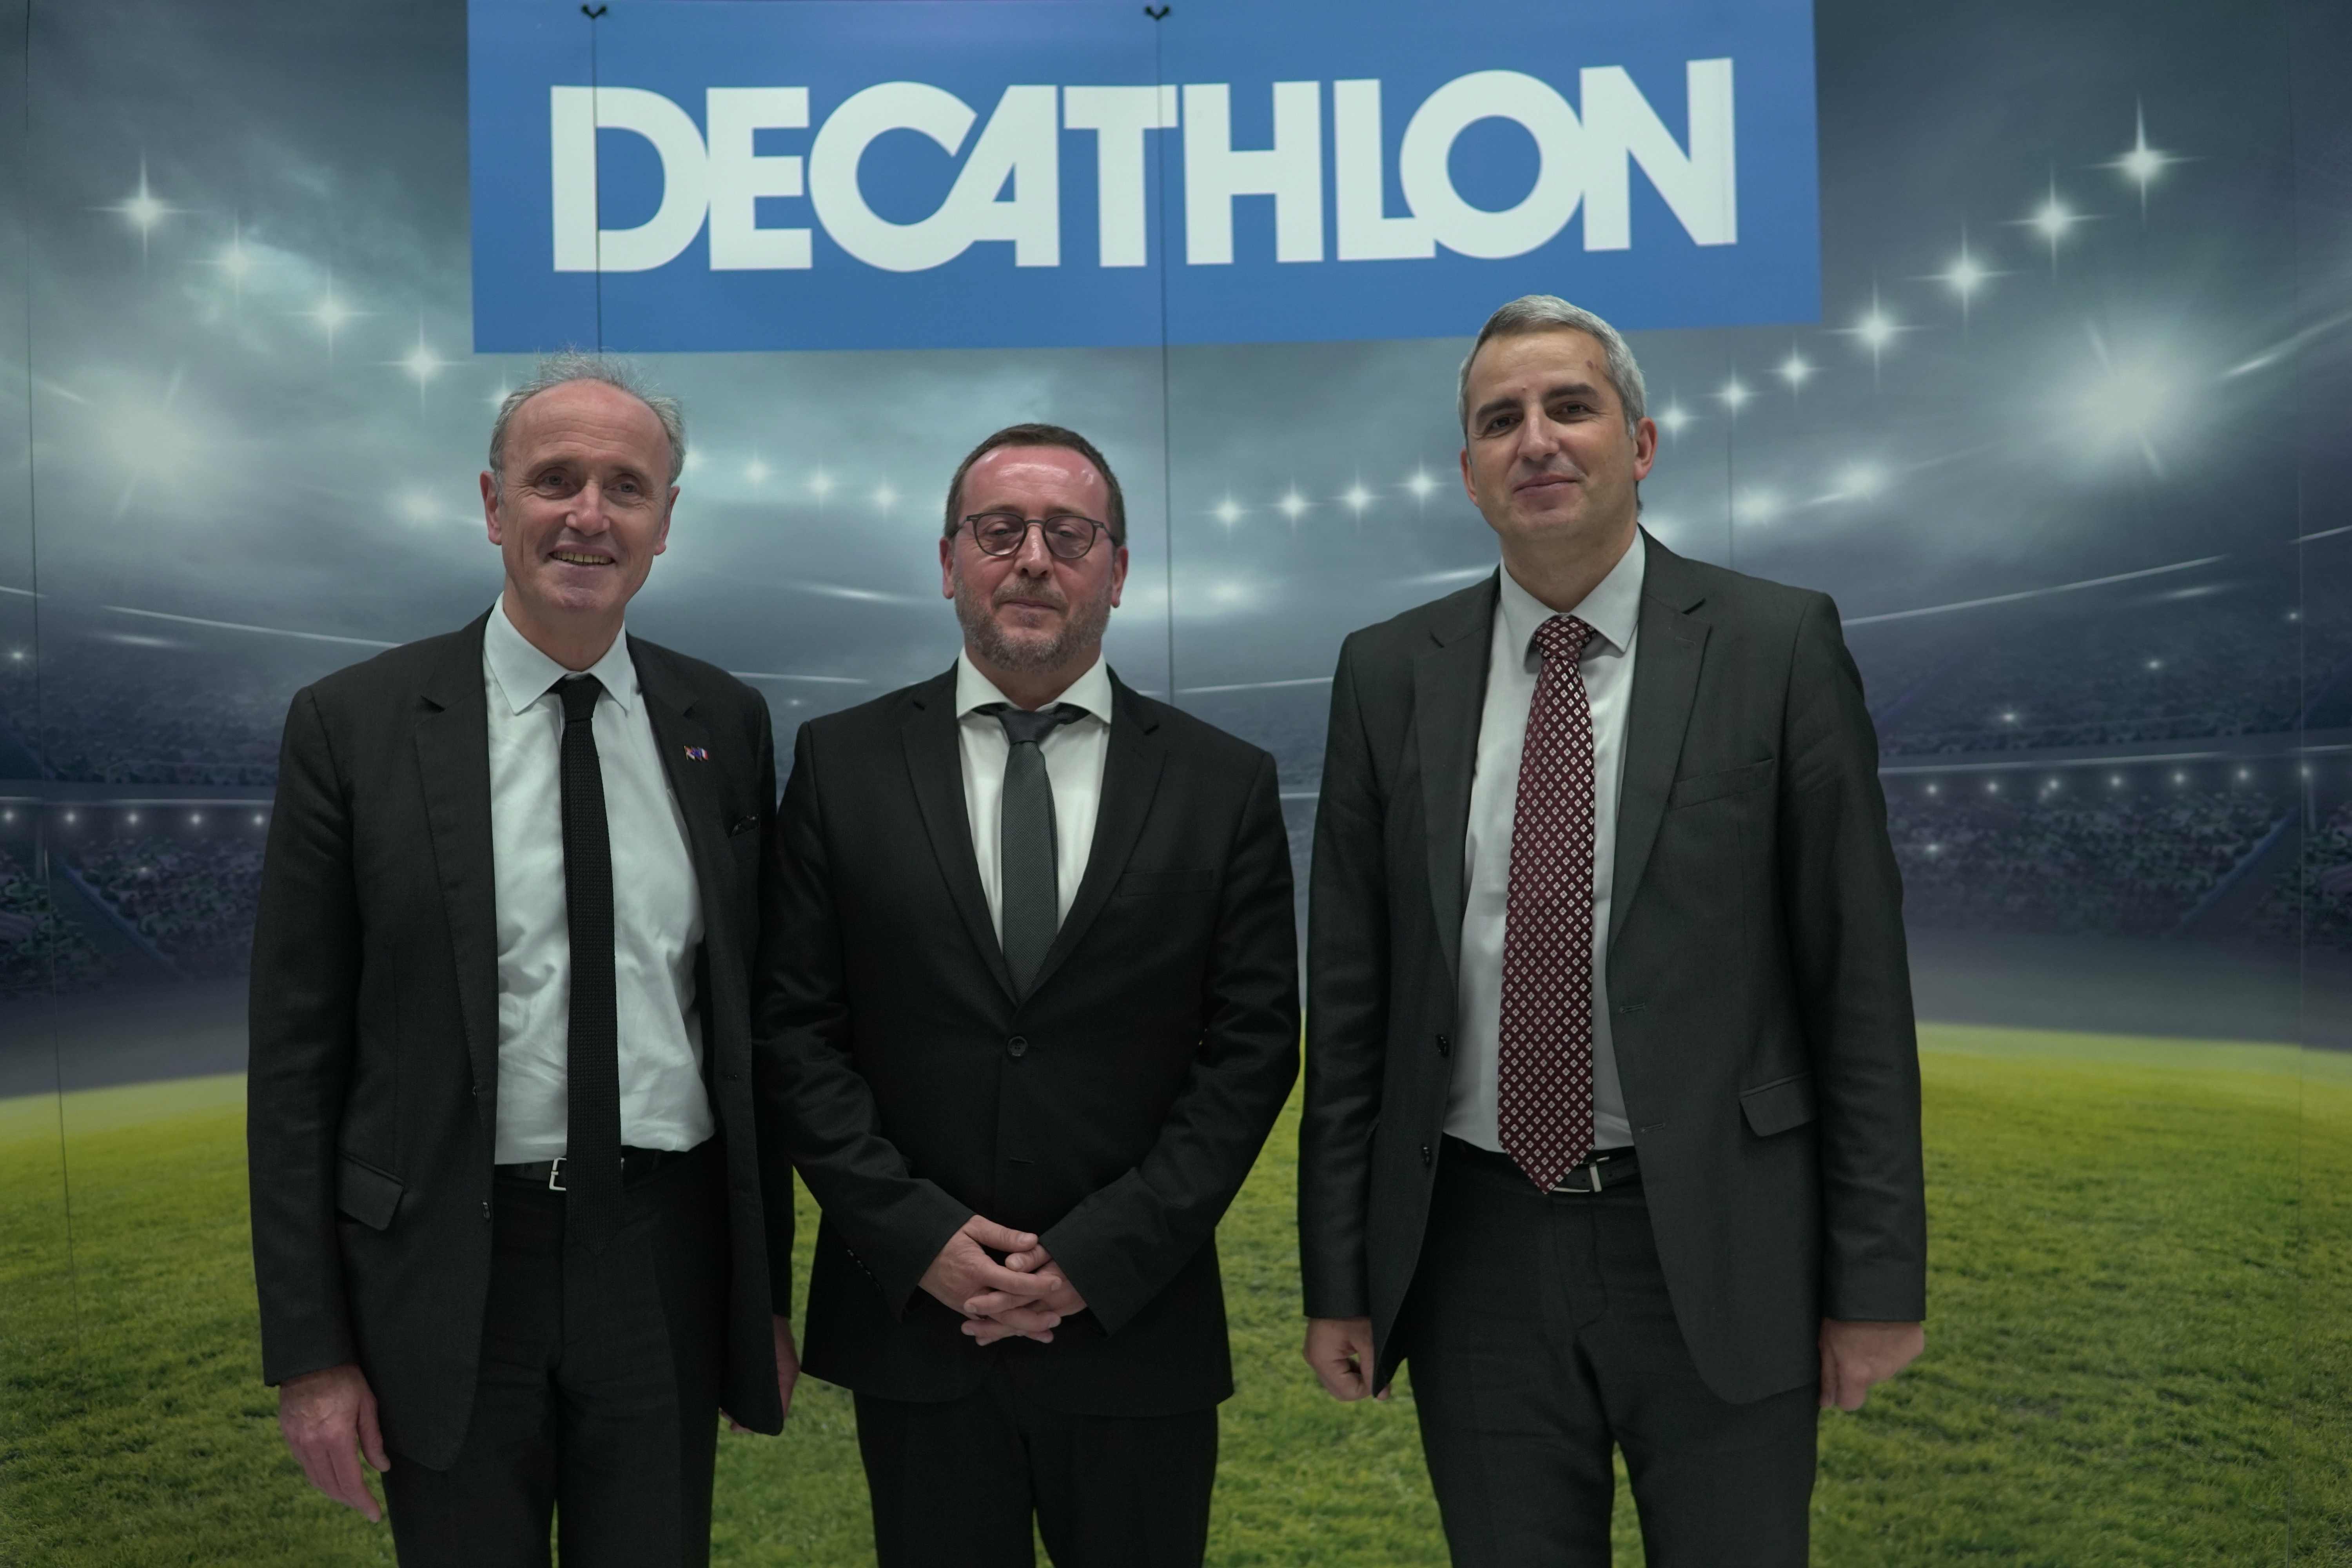 Decathlon to enter Serbia